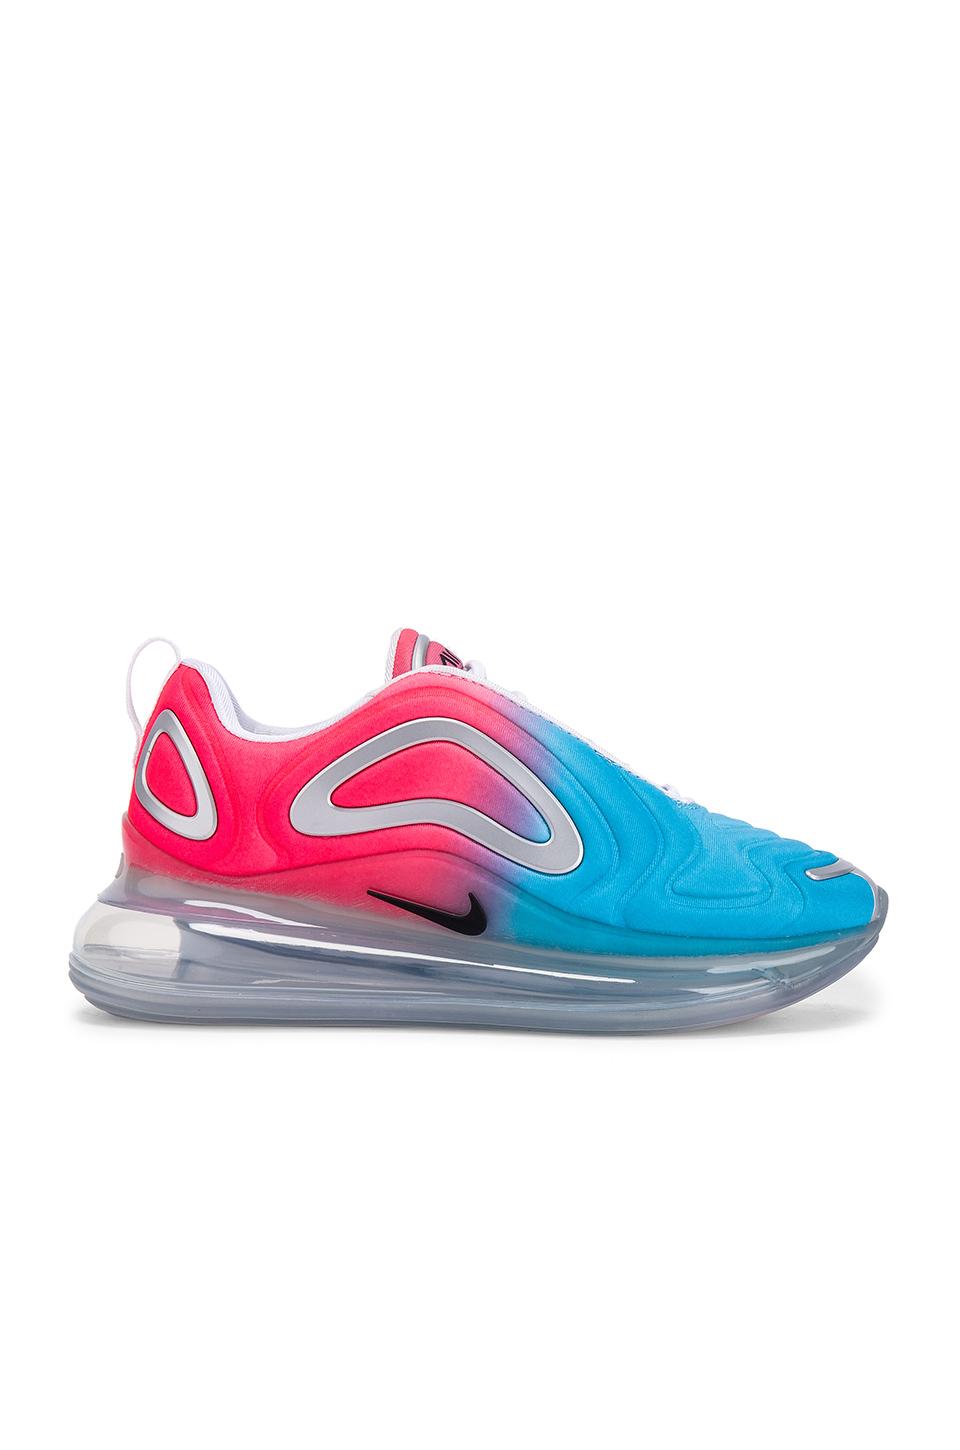 Nike Air Max 720 Pink Sea in Blue